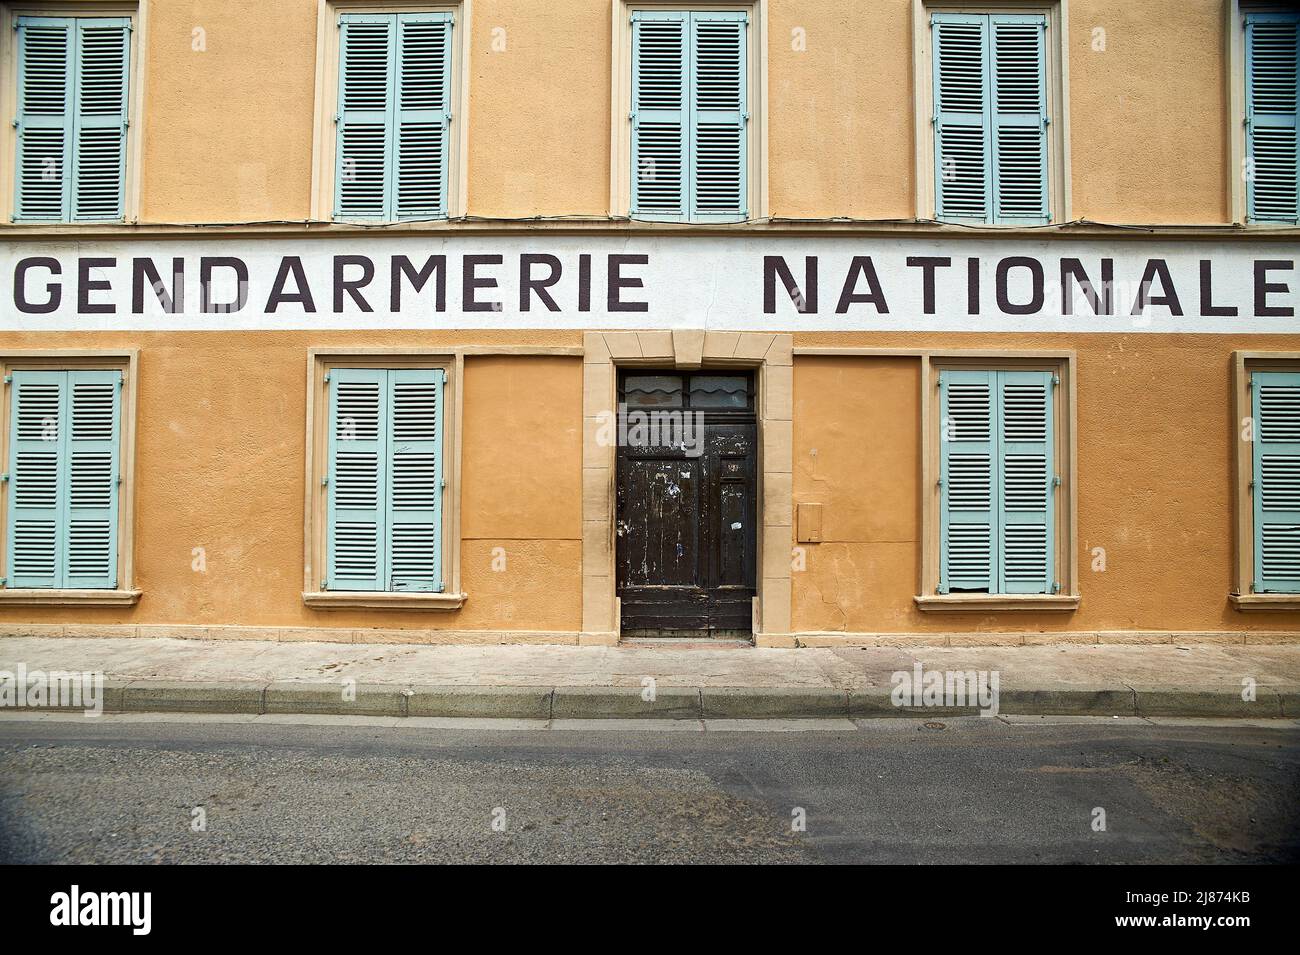 gendarmerie nationale - gendarme of saint tropez, police station from movie Stock Photo